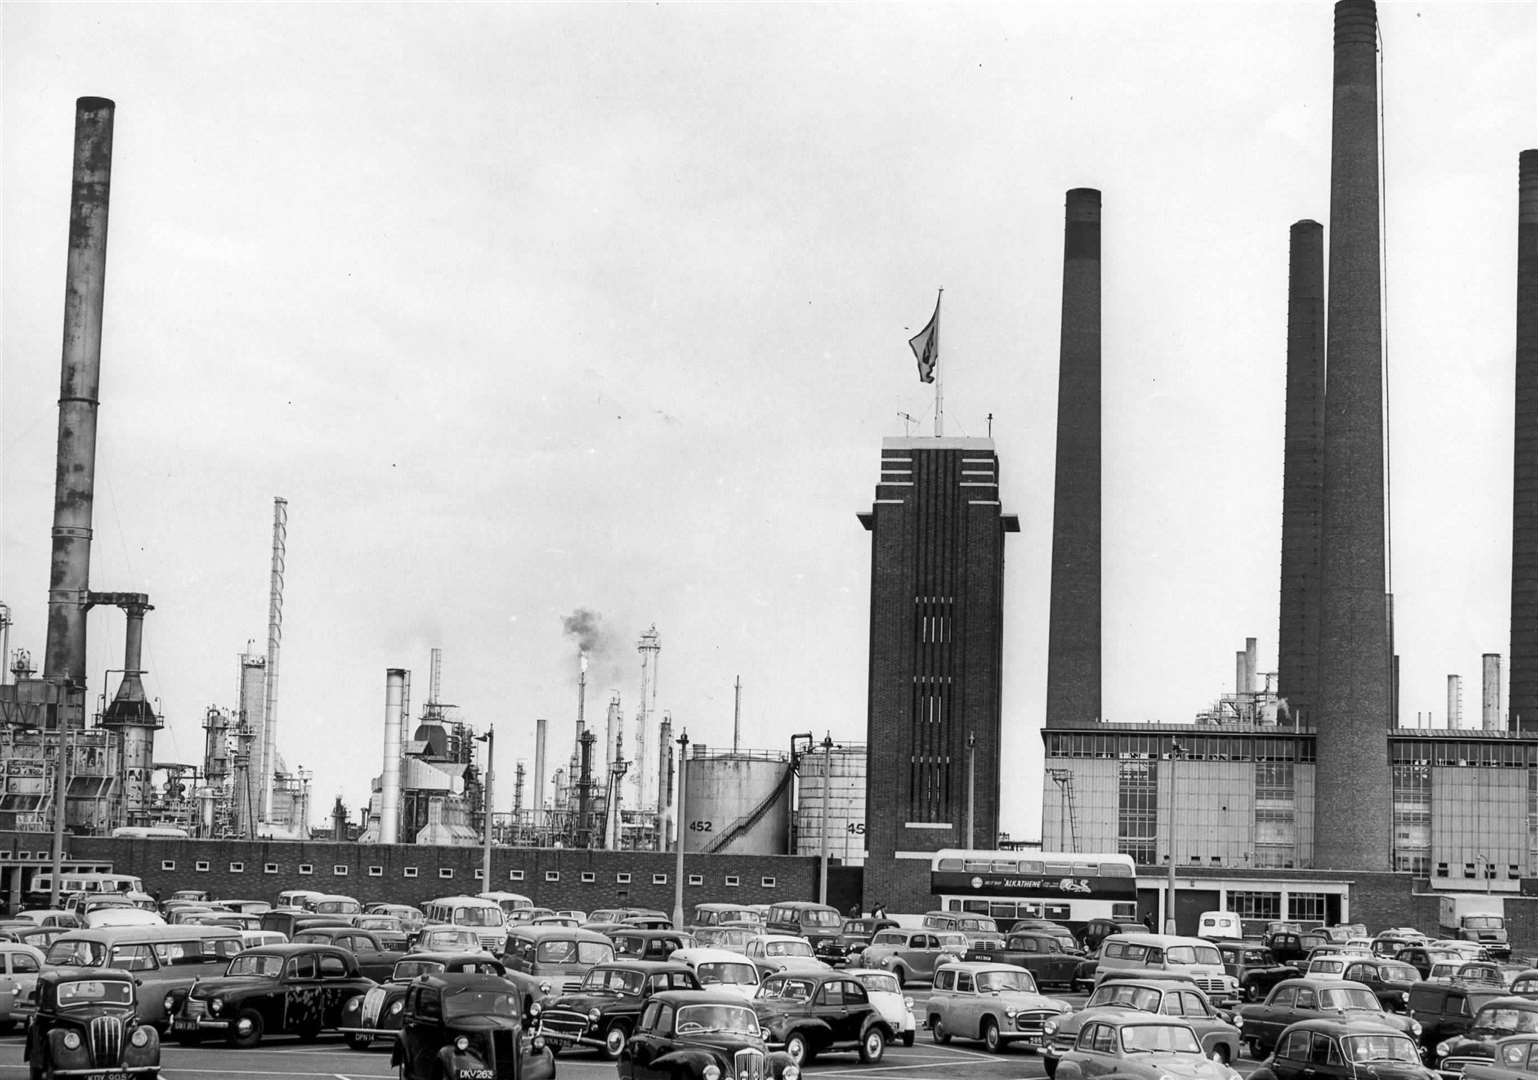 BP Oil Refinery on Isle of Grain - 18th June 1962